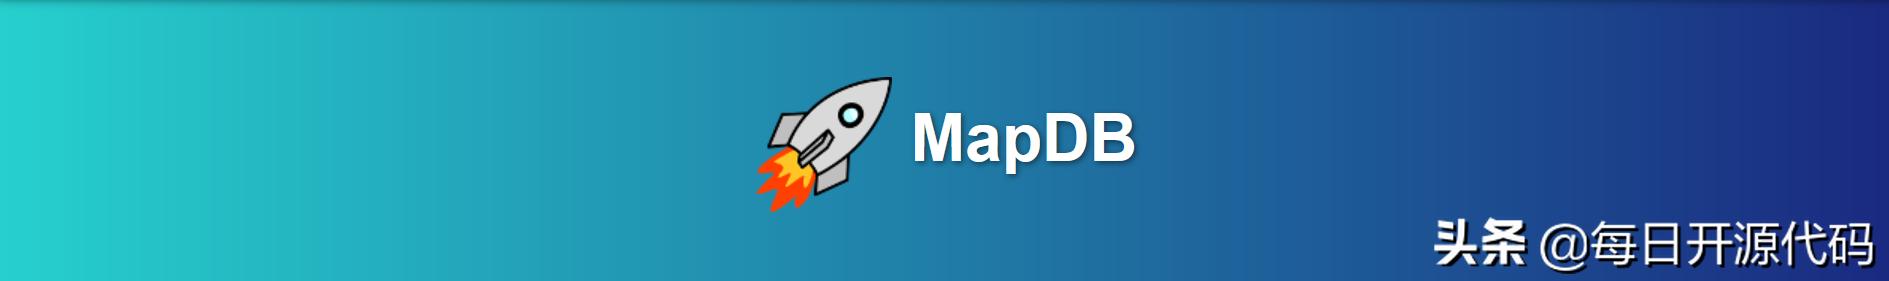 MapDB - 快速易用的嵌入式 Java 数据库引擎